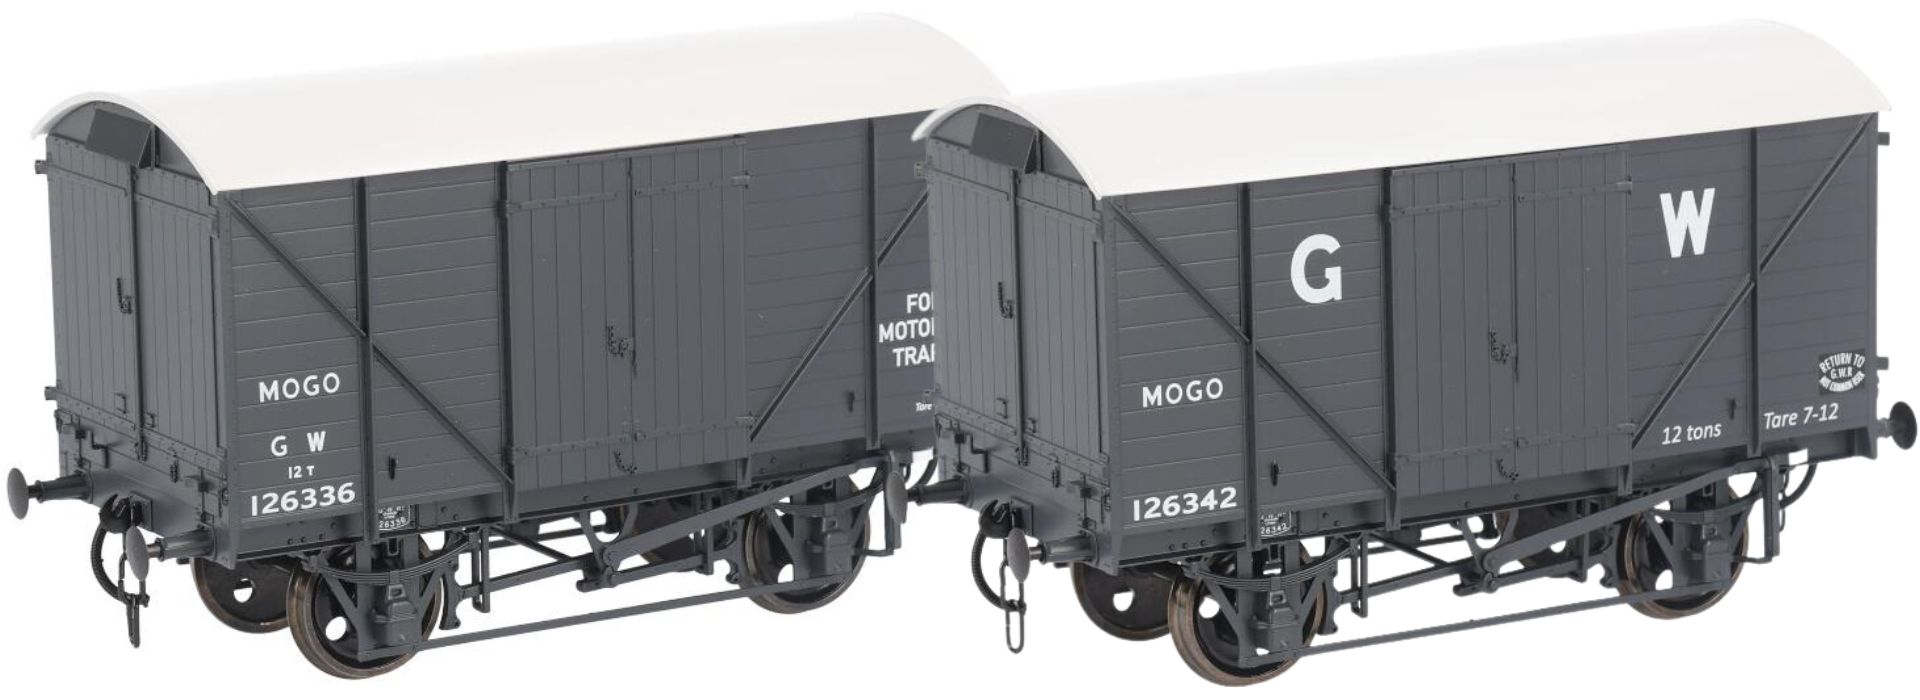 Dapol O Gauge (1:43 Scale) GWR 12 ton Mogo van